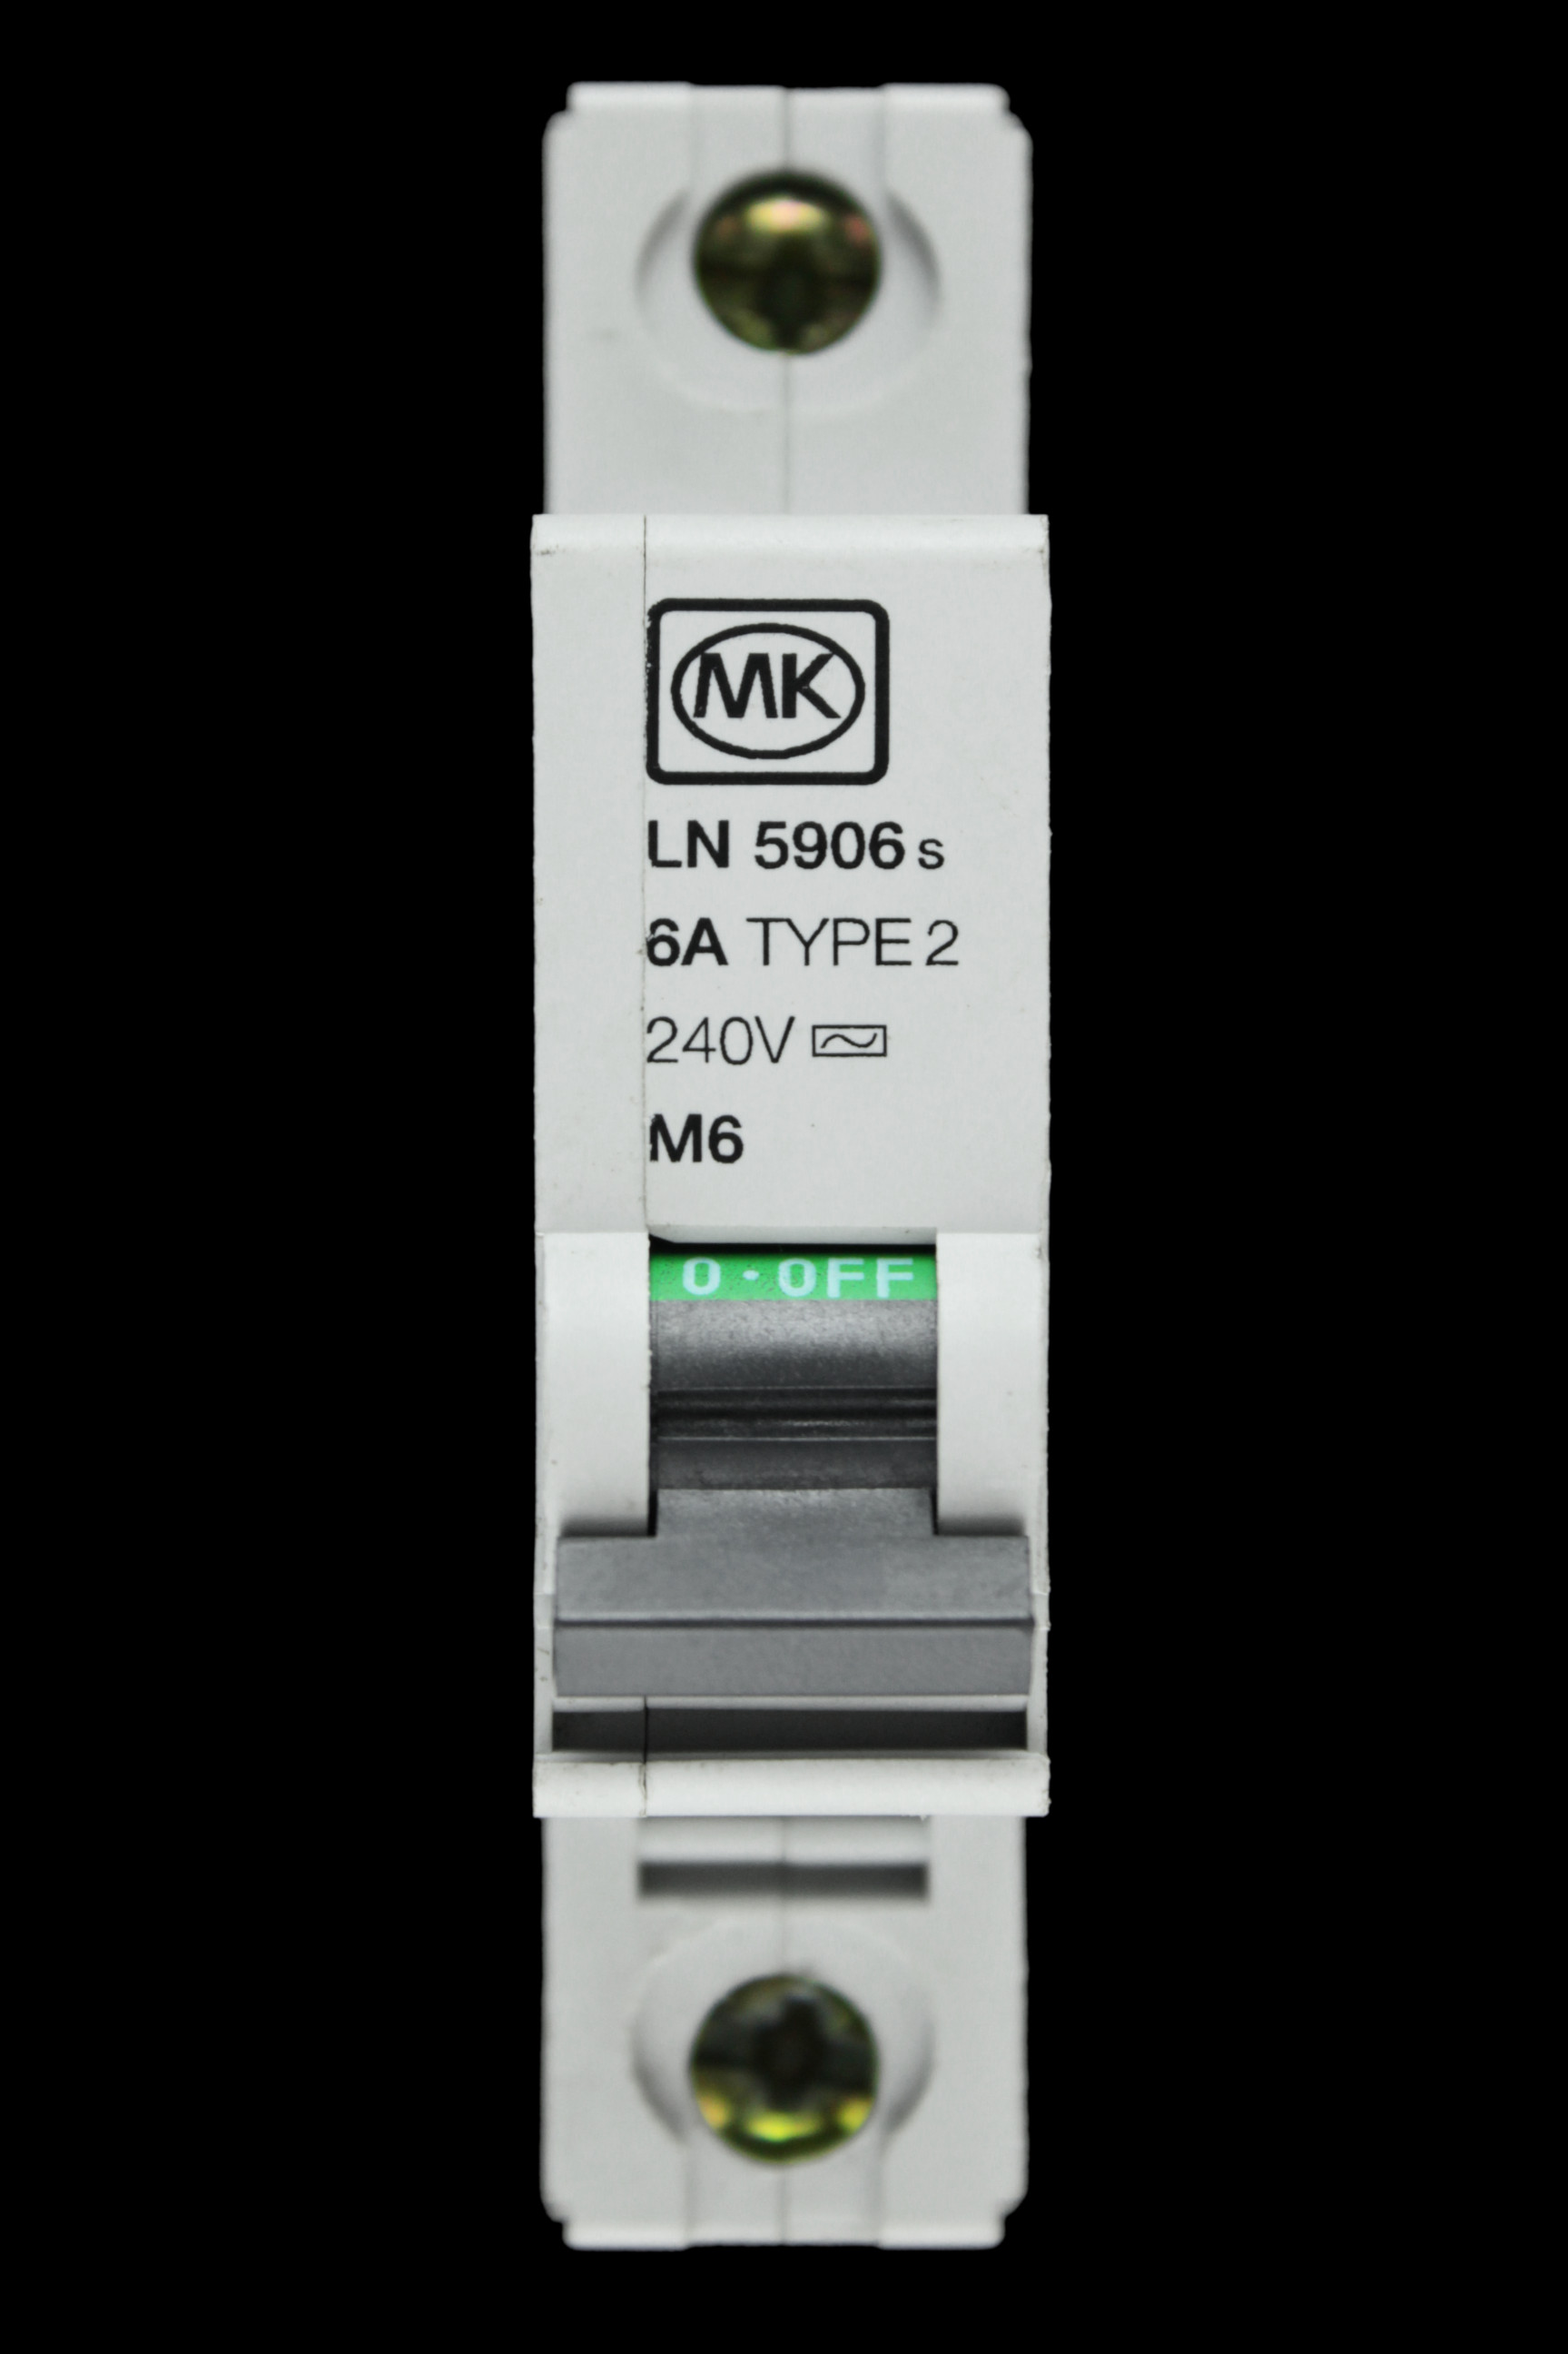 MK 6 AMP TYPE 2 M6 MCB CIRCUIT BREAKER LN 5906s SENTRY